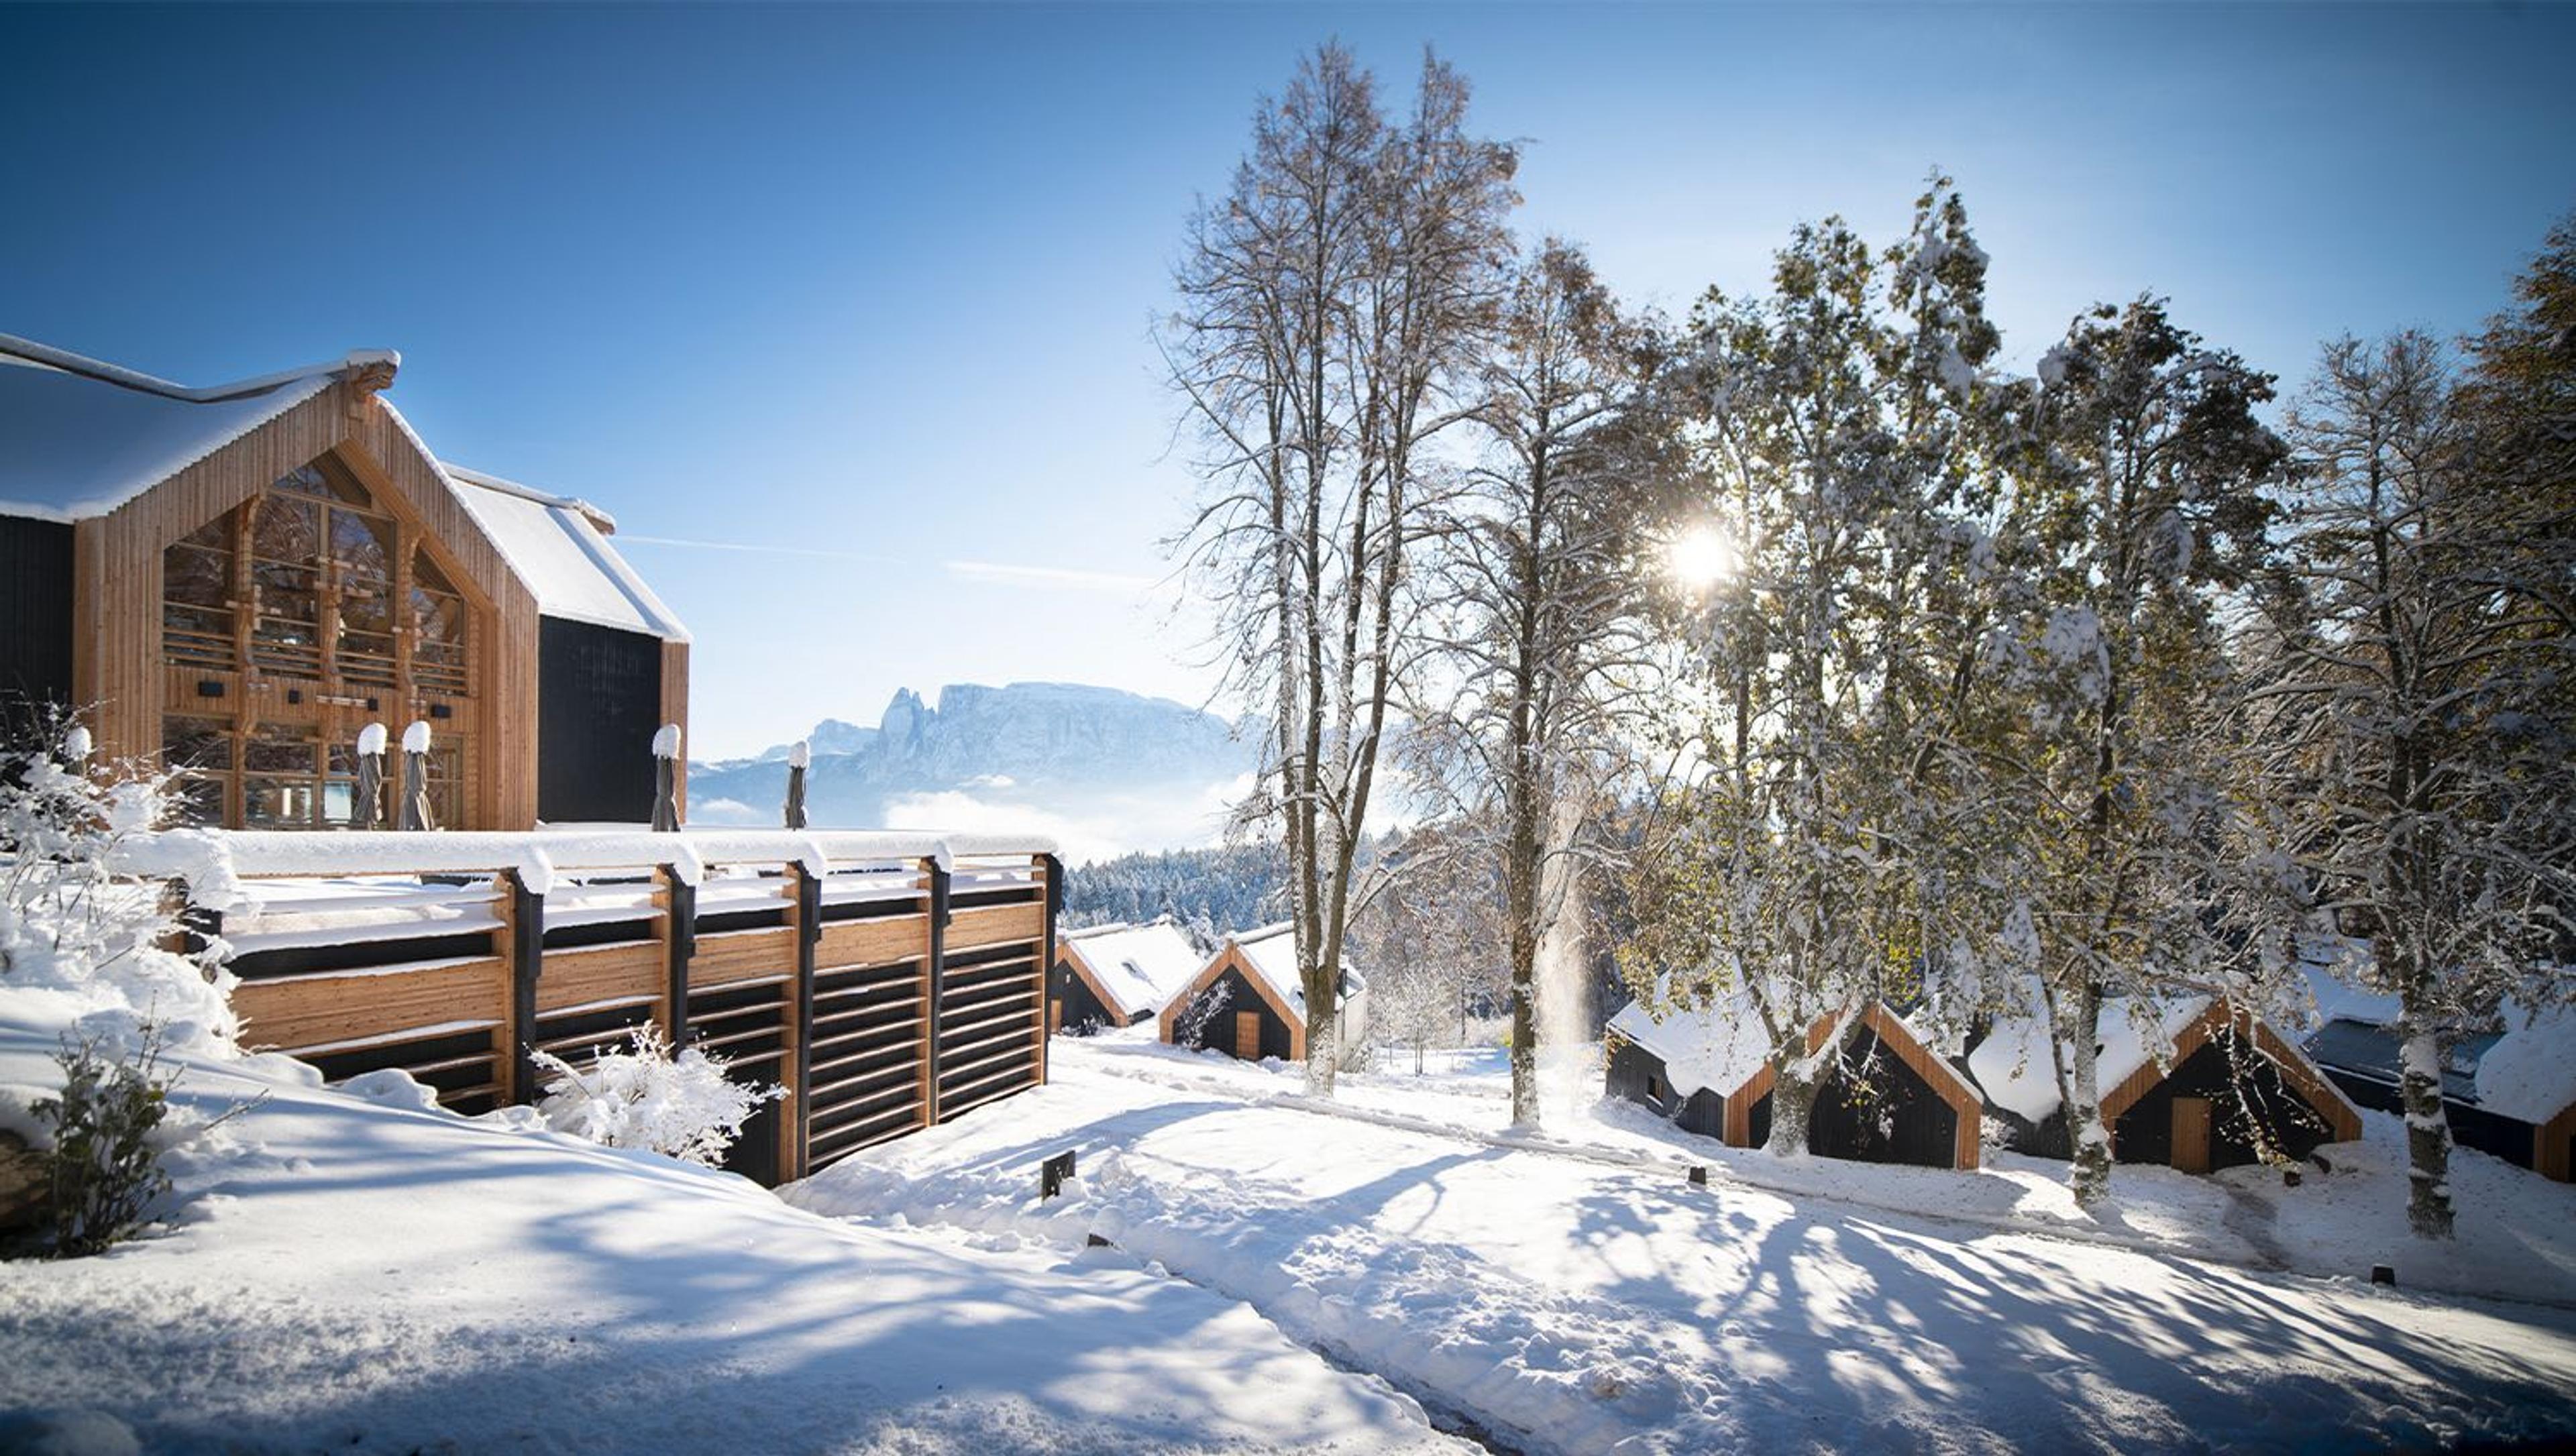 Adler Lodge Ritten: Relax in the Snow